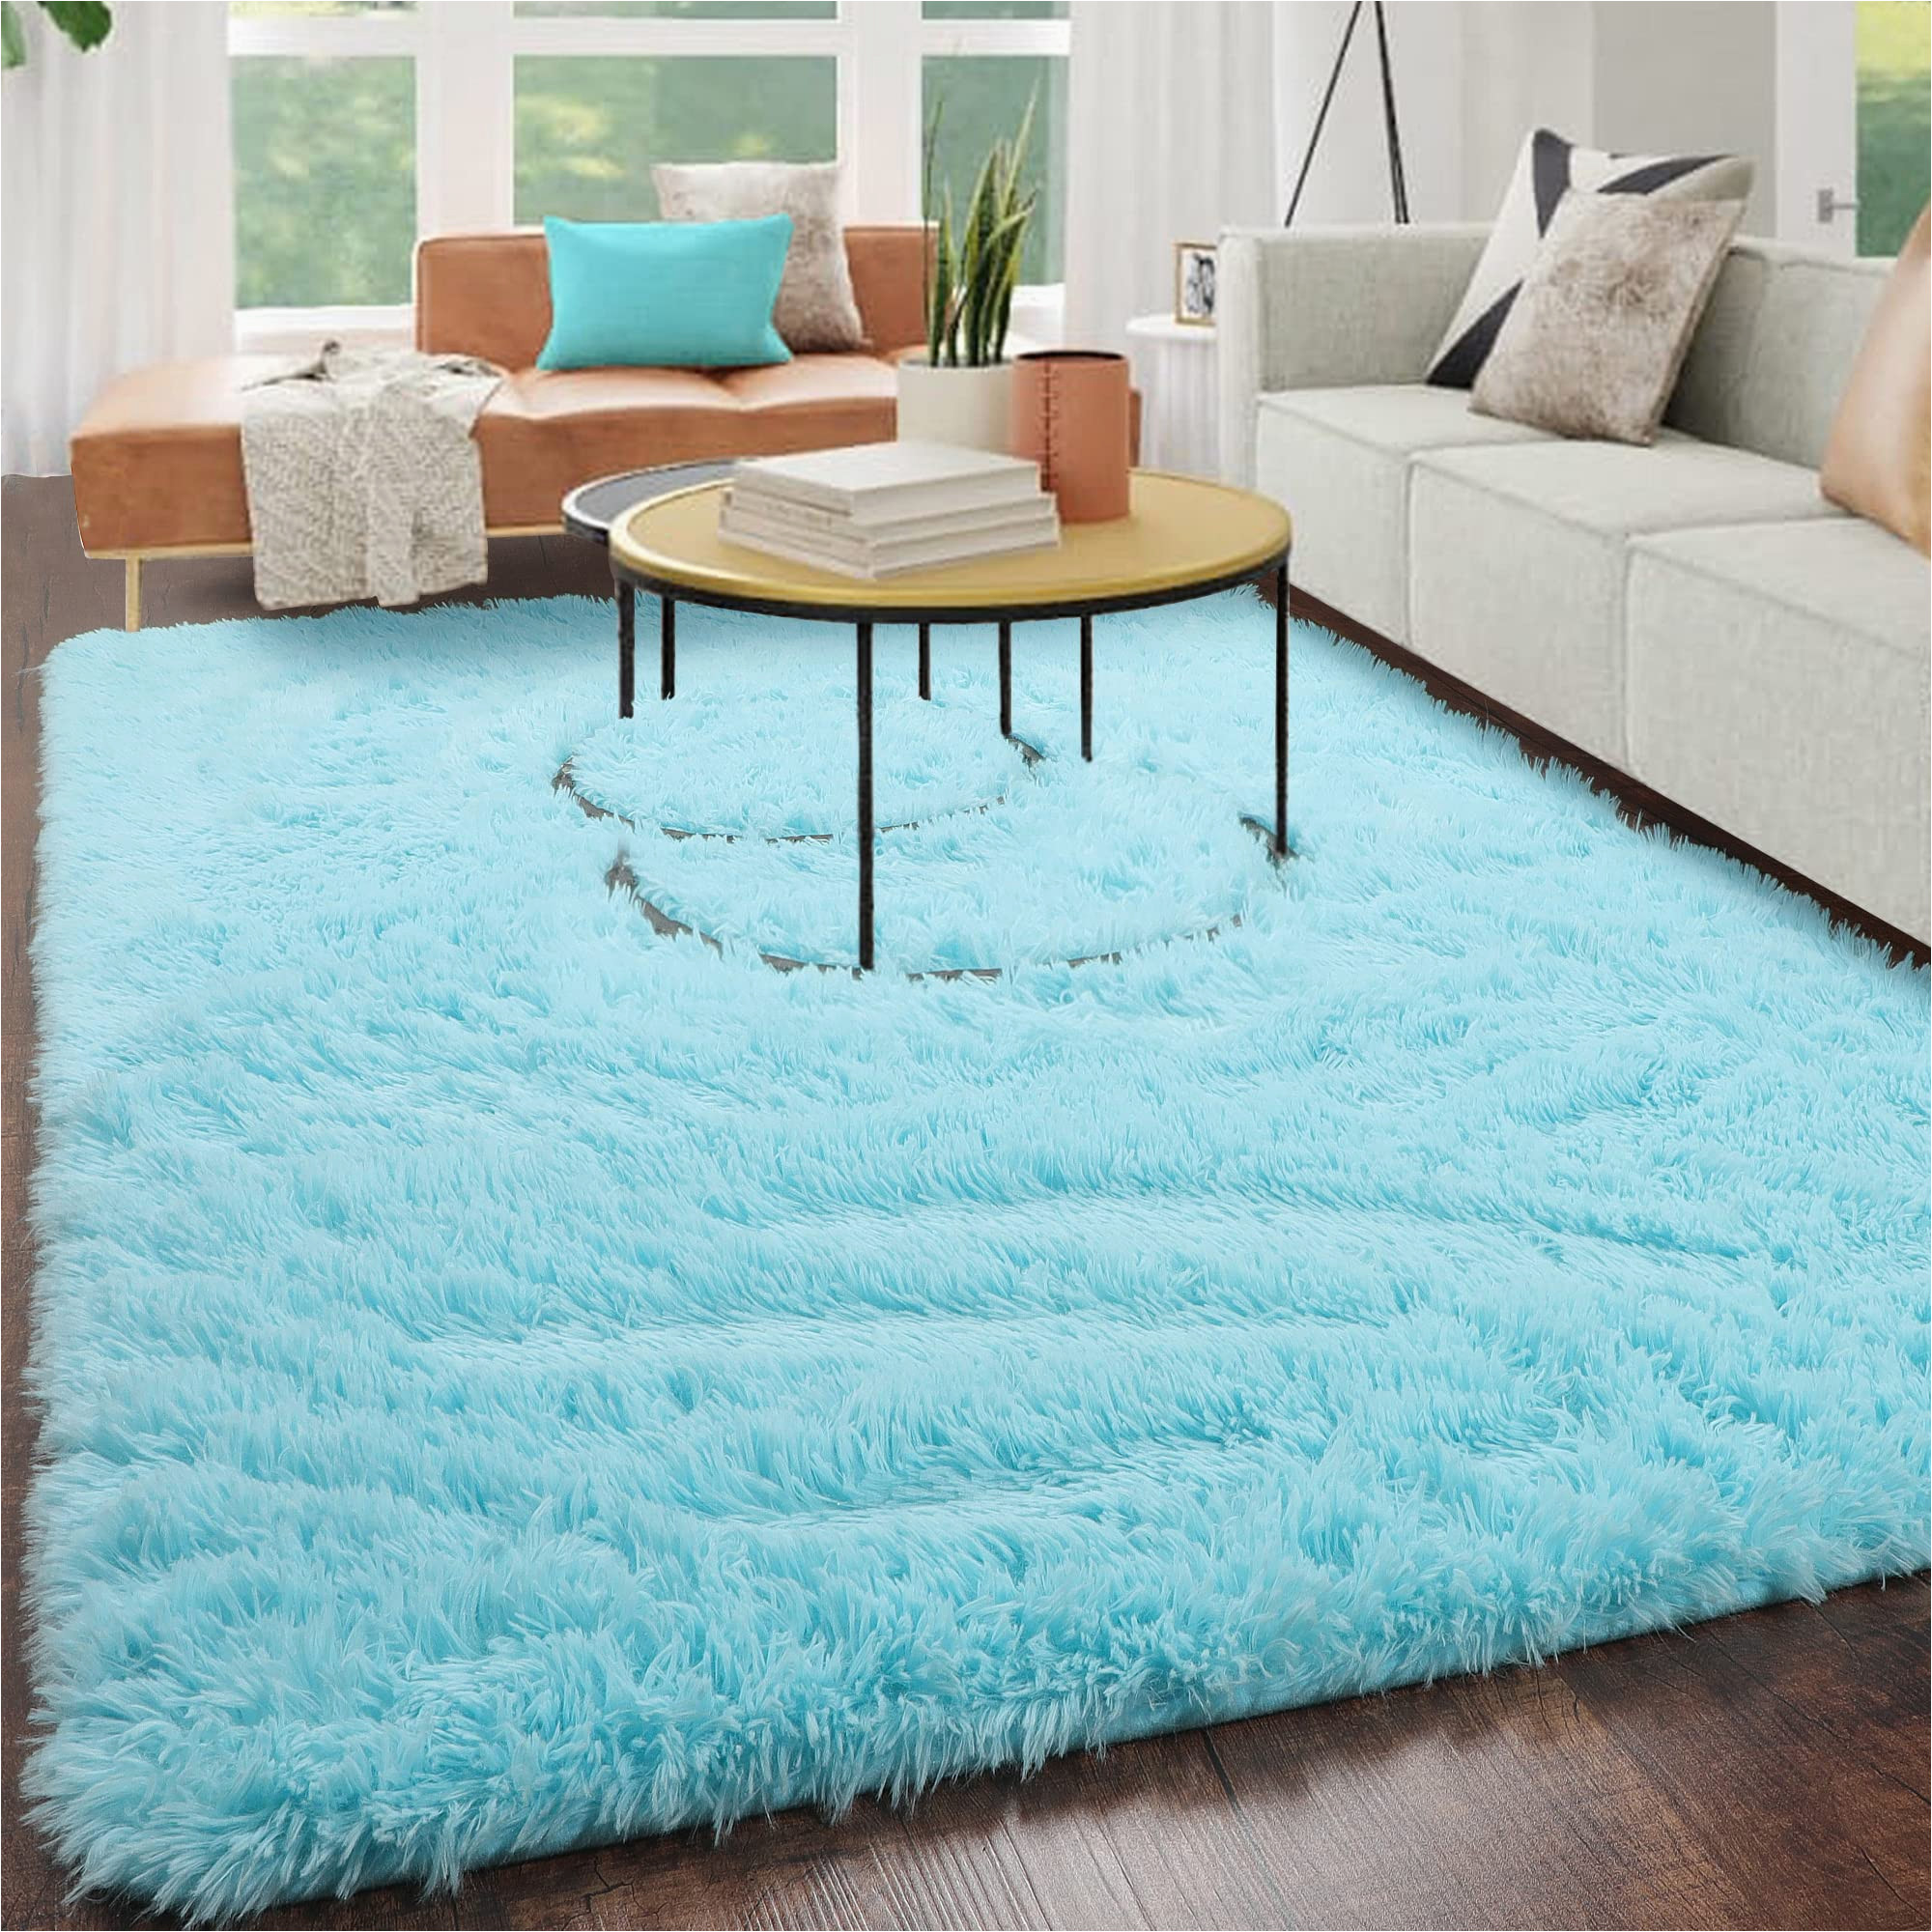 Baby Blue Fur Rug Amazon.com: Kicmor Light Blue Fluffy Rugs for Bedroom,4×6 Ft …